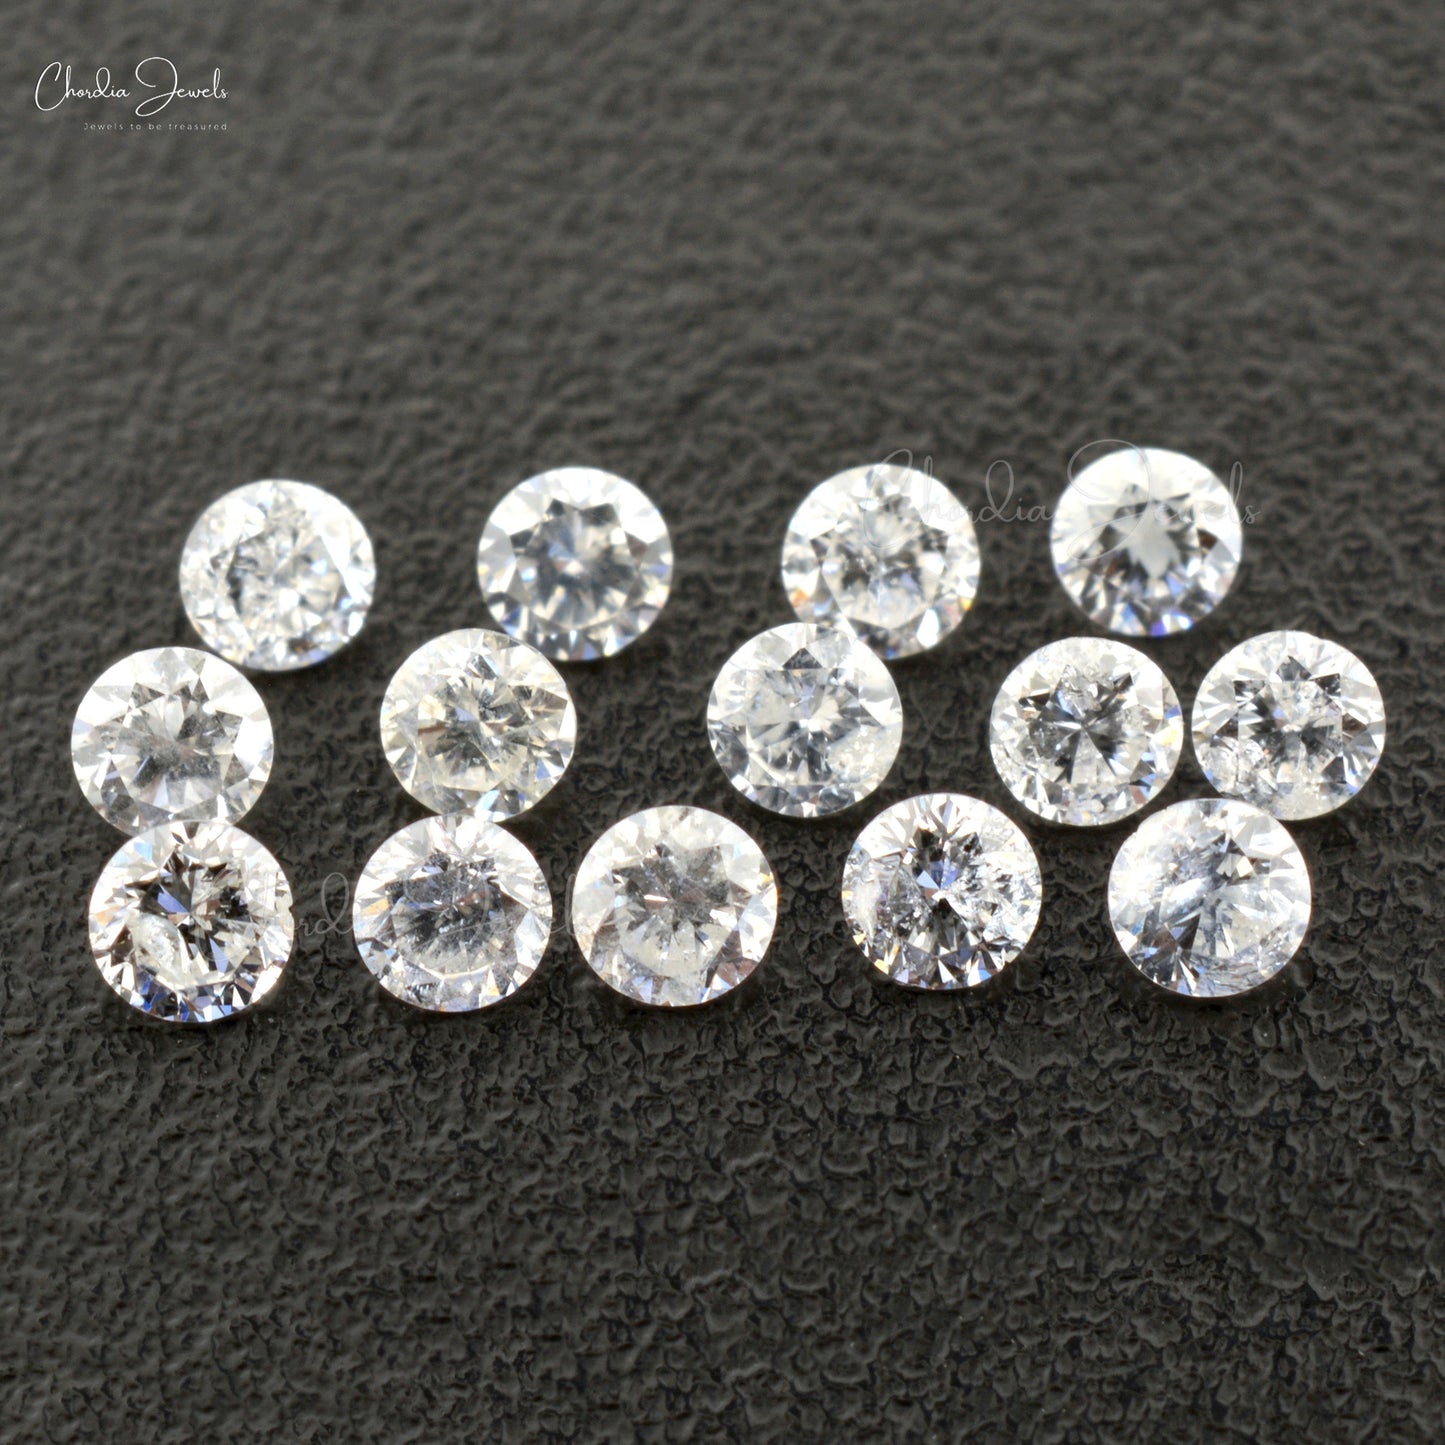 White Diamond I1-I2 / G-H Round Excellent Cut 2.90 MM Loose Gemstone, 1 Piece